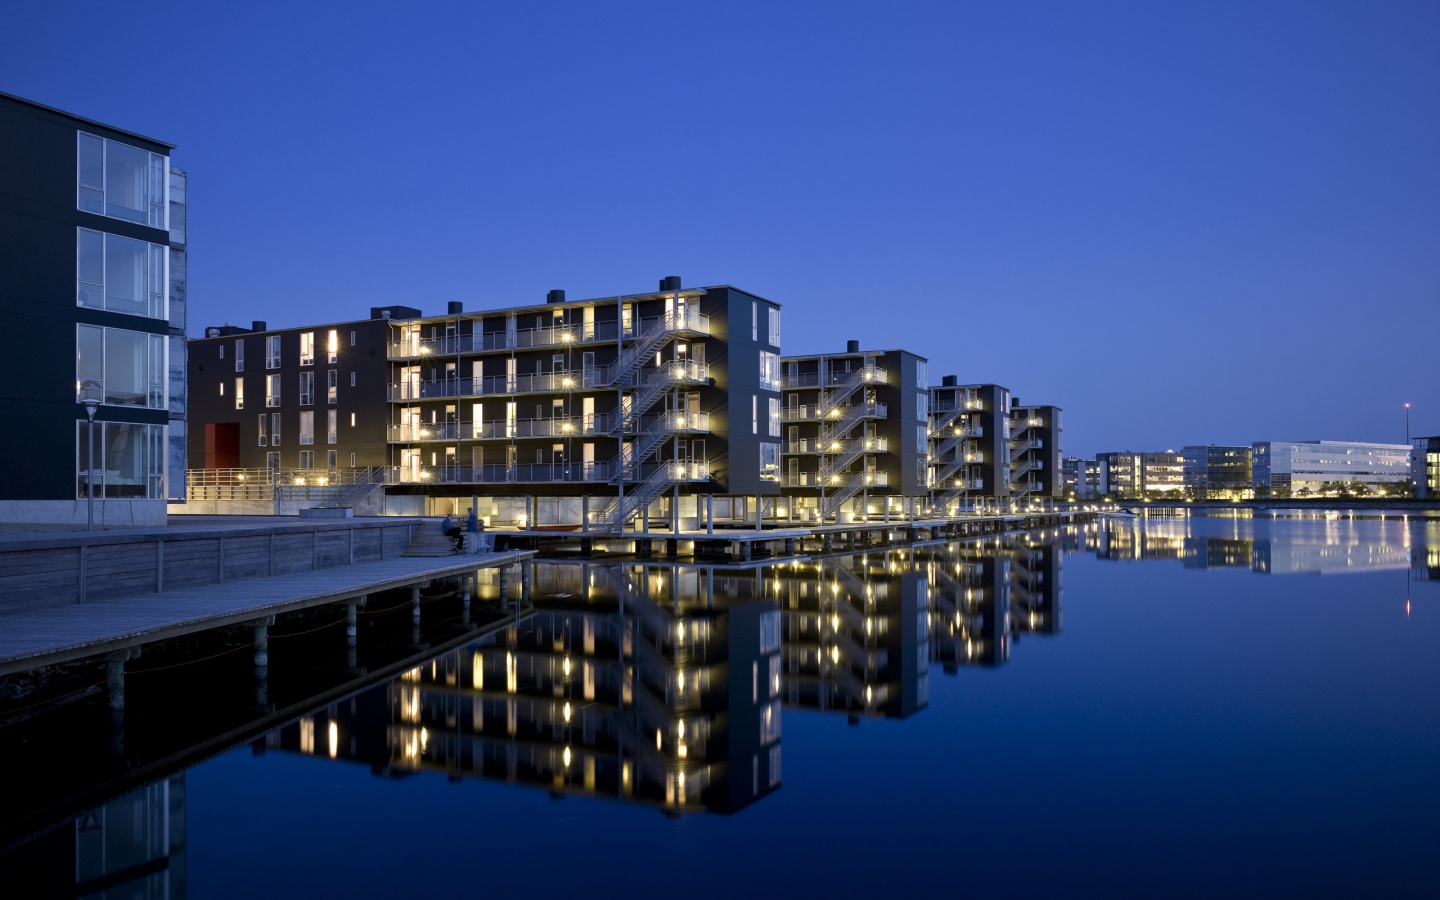 Teglvrkshavnen Block in Copenhagen for 1440 x 900 widescreen resolution